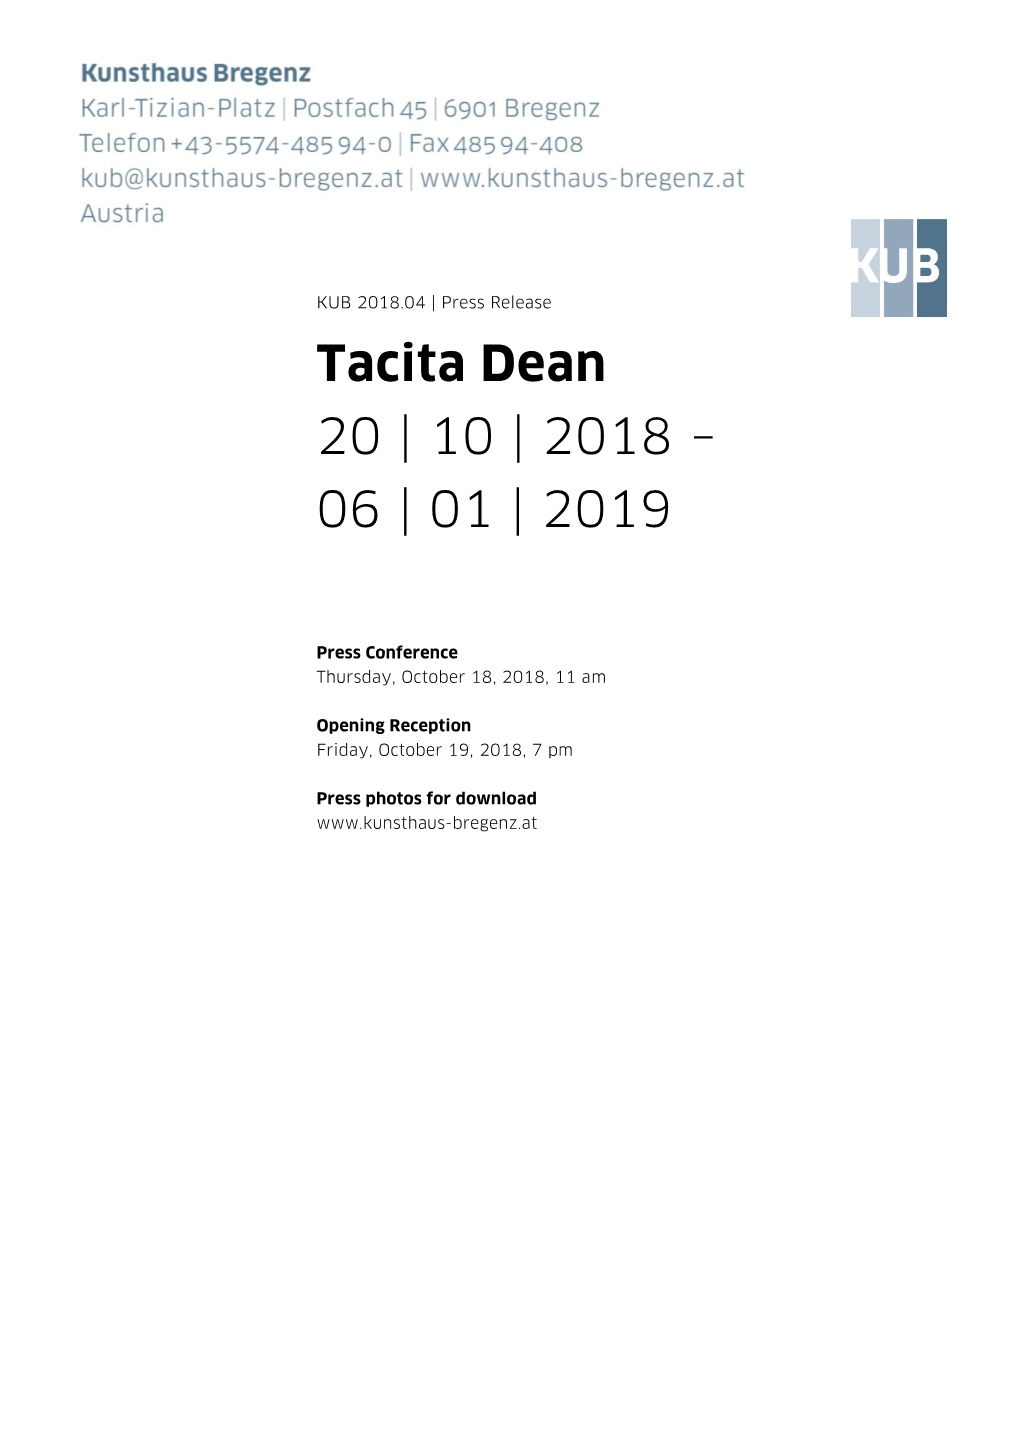 Tacita Dean 20 | 10 | 2018 – 06 | 01 | 2019